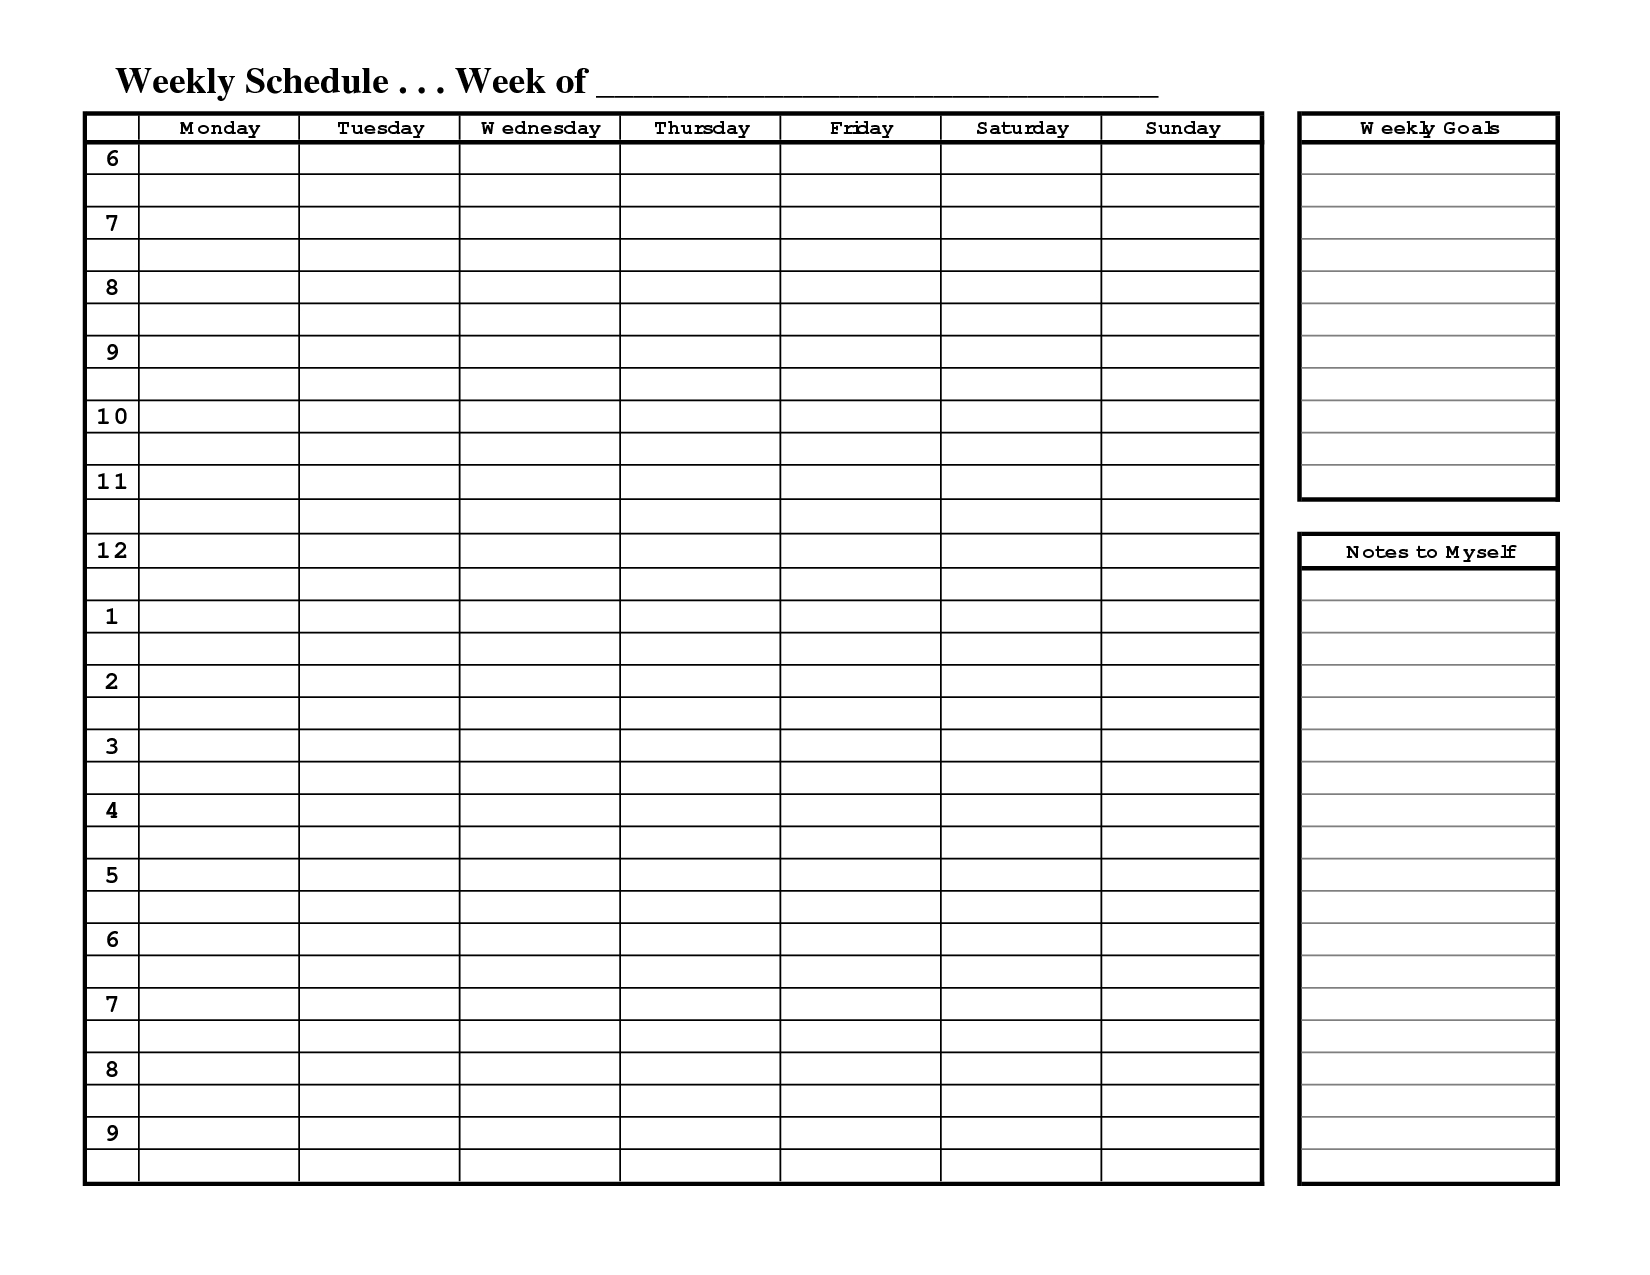 Free Printable Weekly Schedule Template | Organize My Life | Weekly - Free Printable Weekly Schedule